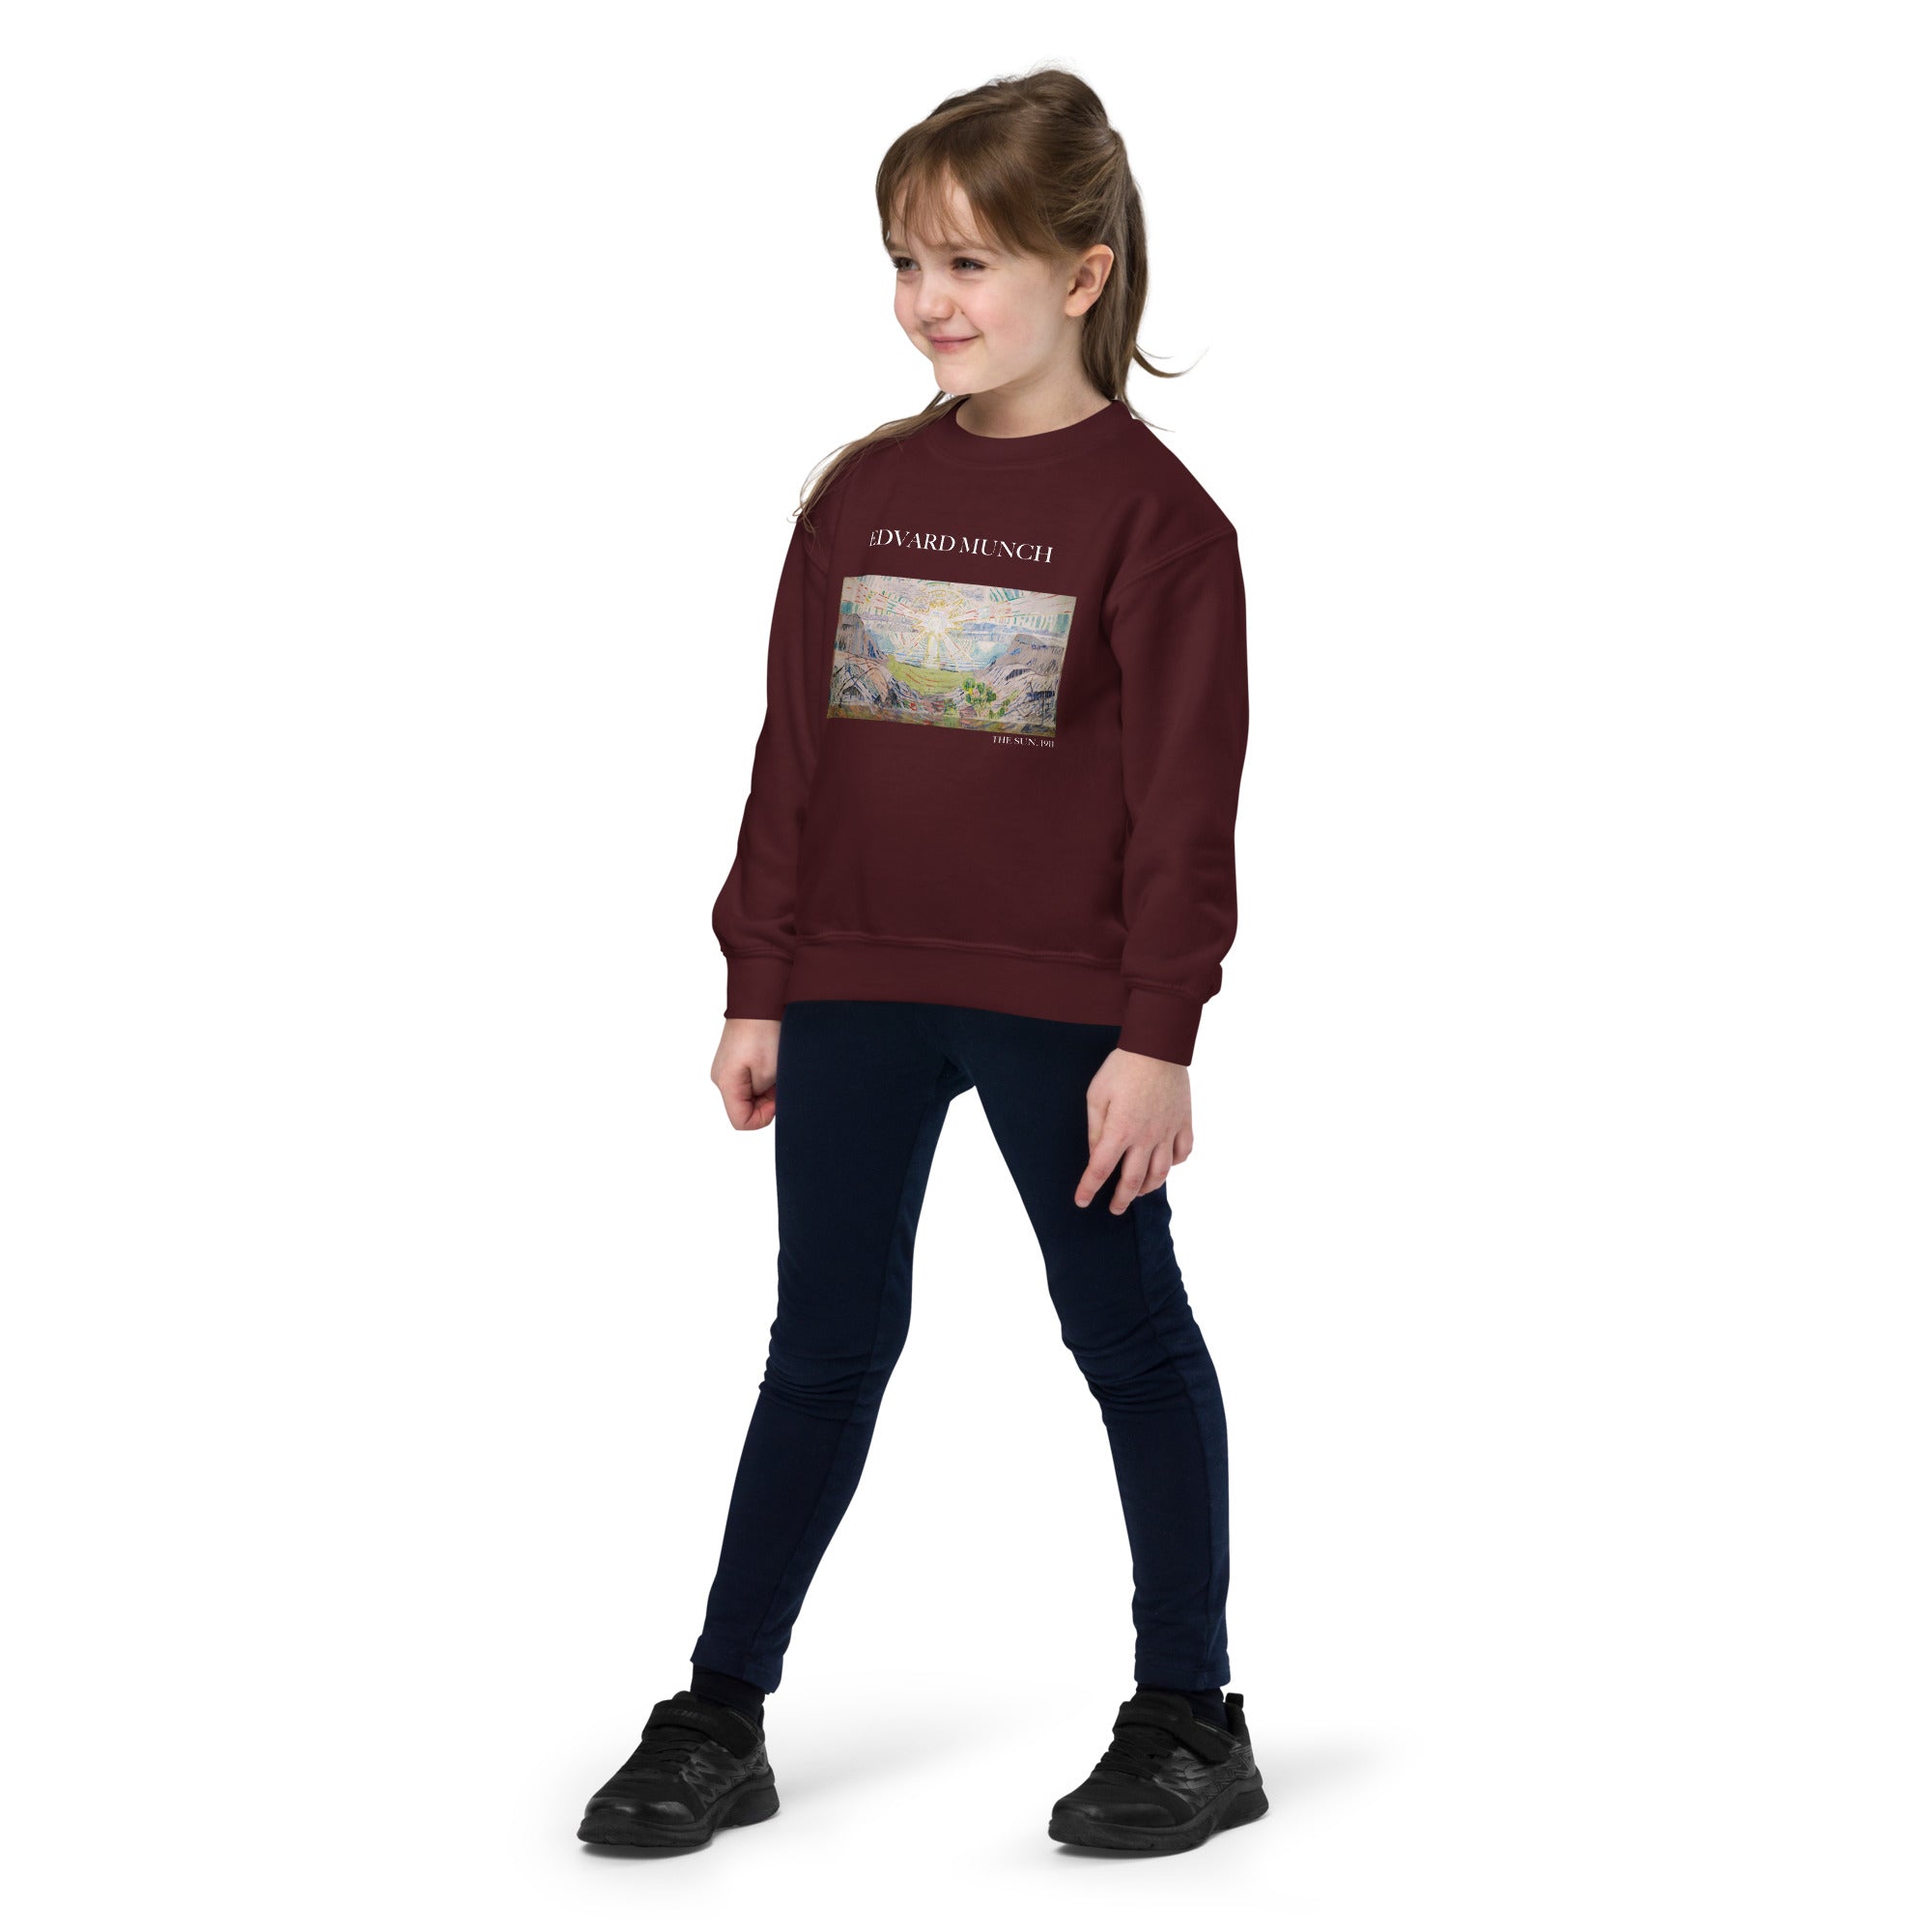 Edvard Munch 'The Sun' Famous Painting Crewneck Sweatshirt | Premium Youth Art Sweatshirt